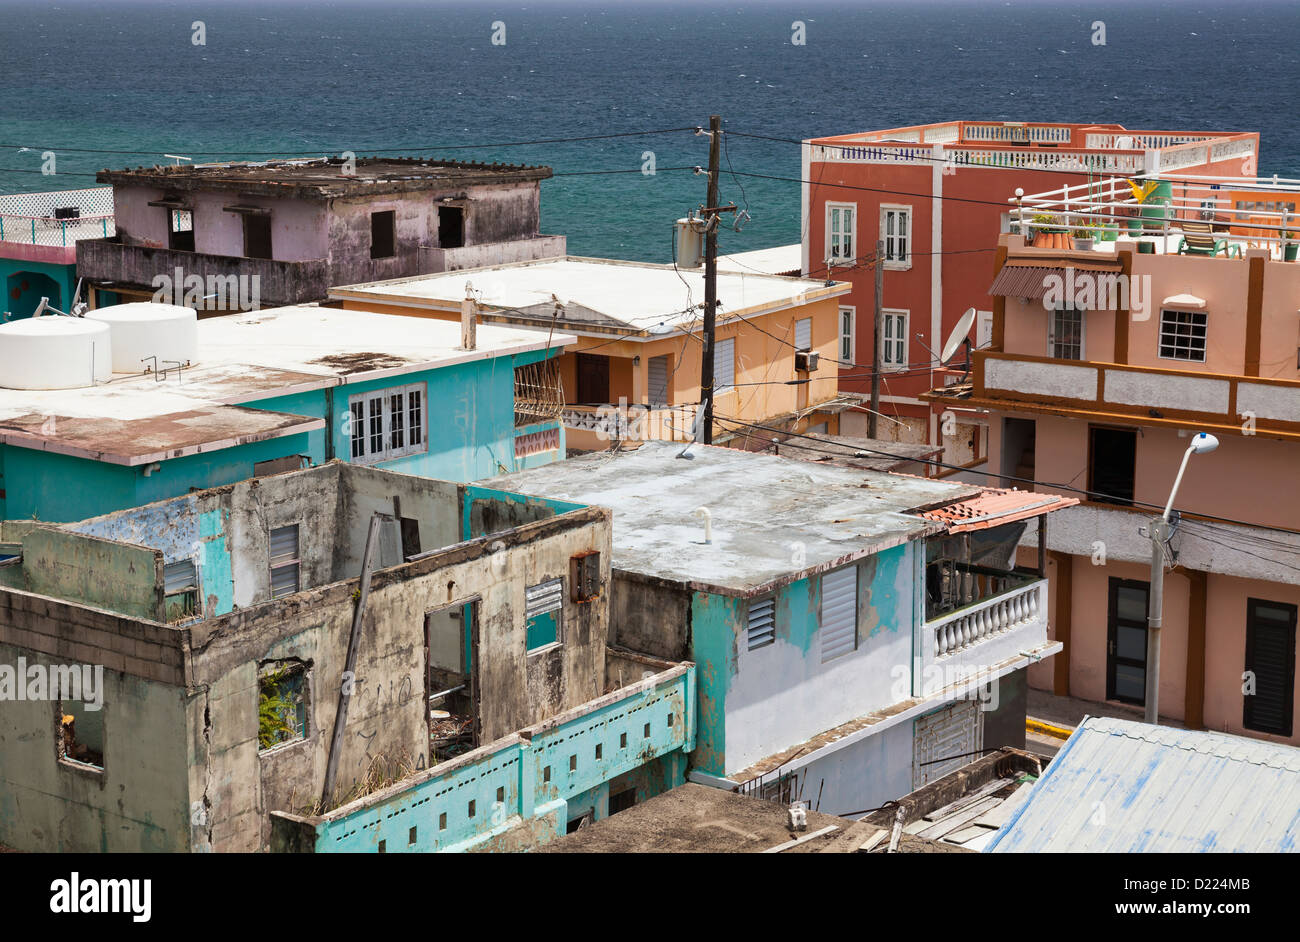 The La Perla district of Old San Juan, Puerto Rico Stock Photo - Alamy